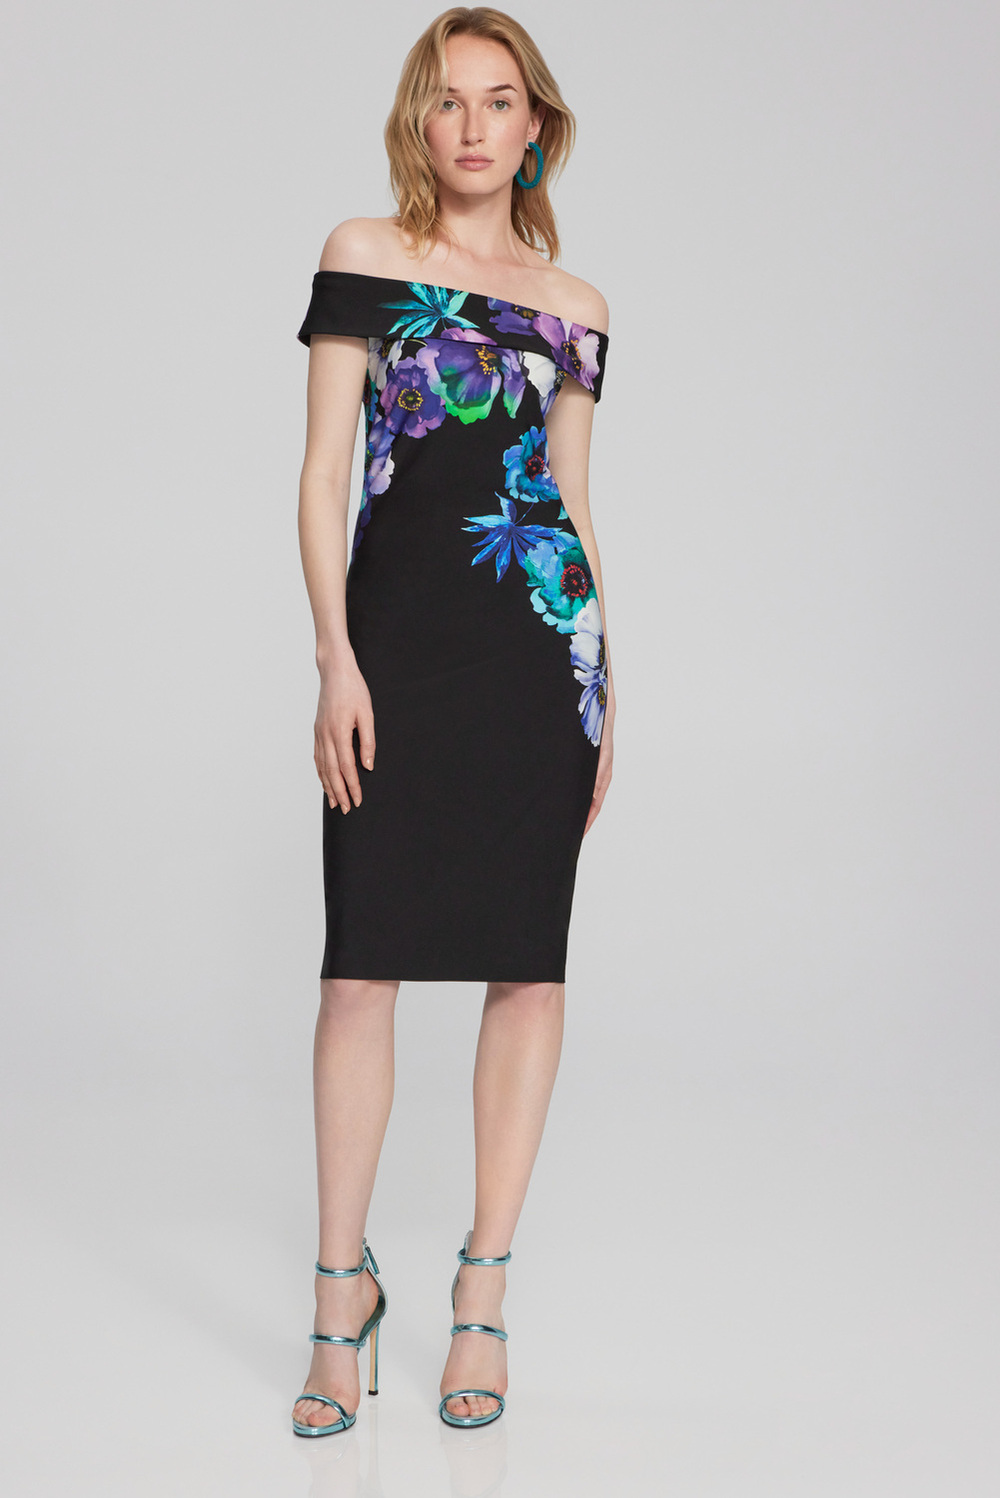 Floral Print Drop Shoulder Dress Style 241775. Black/multi